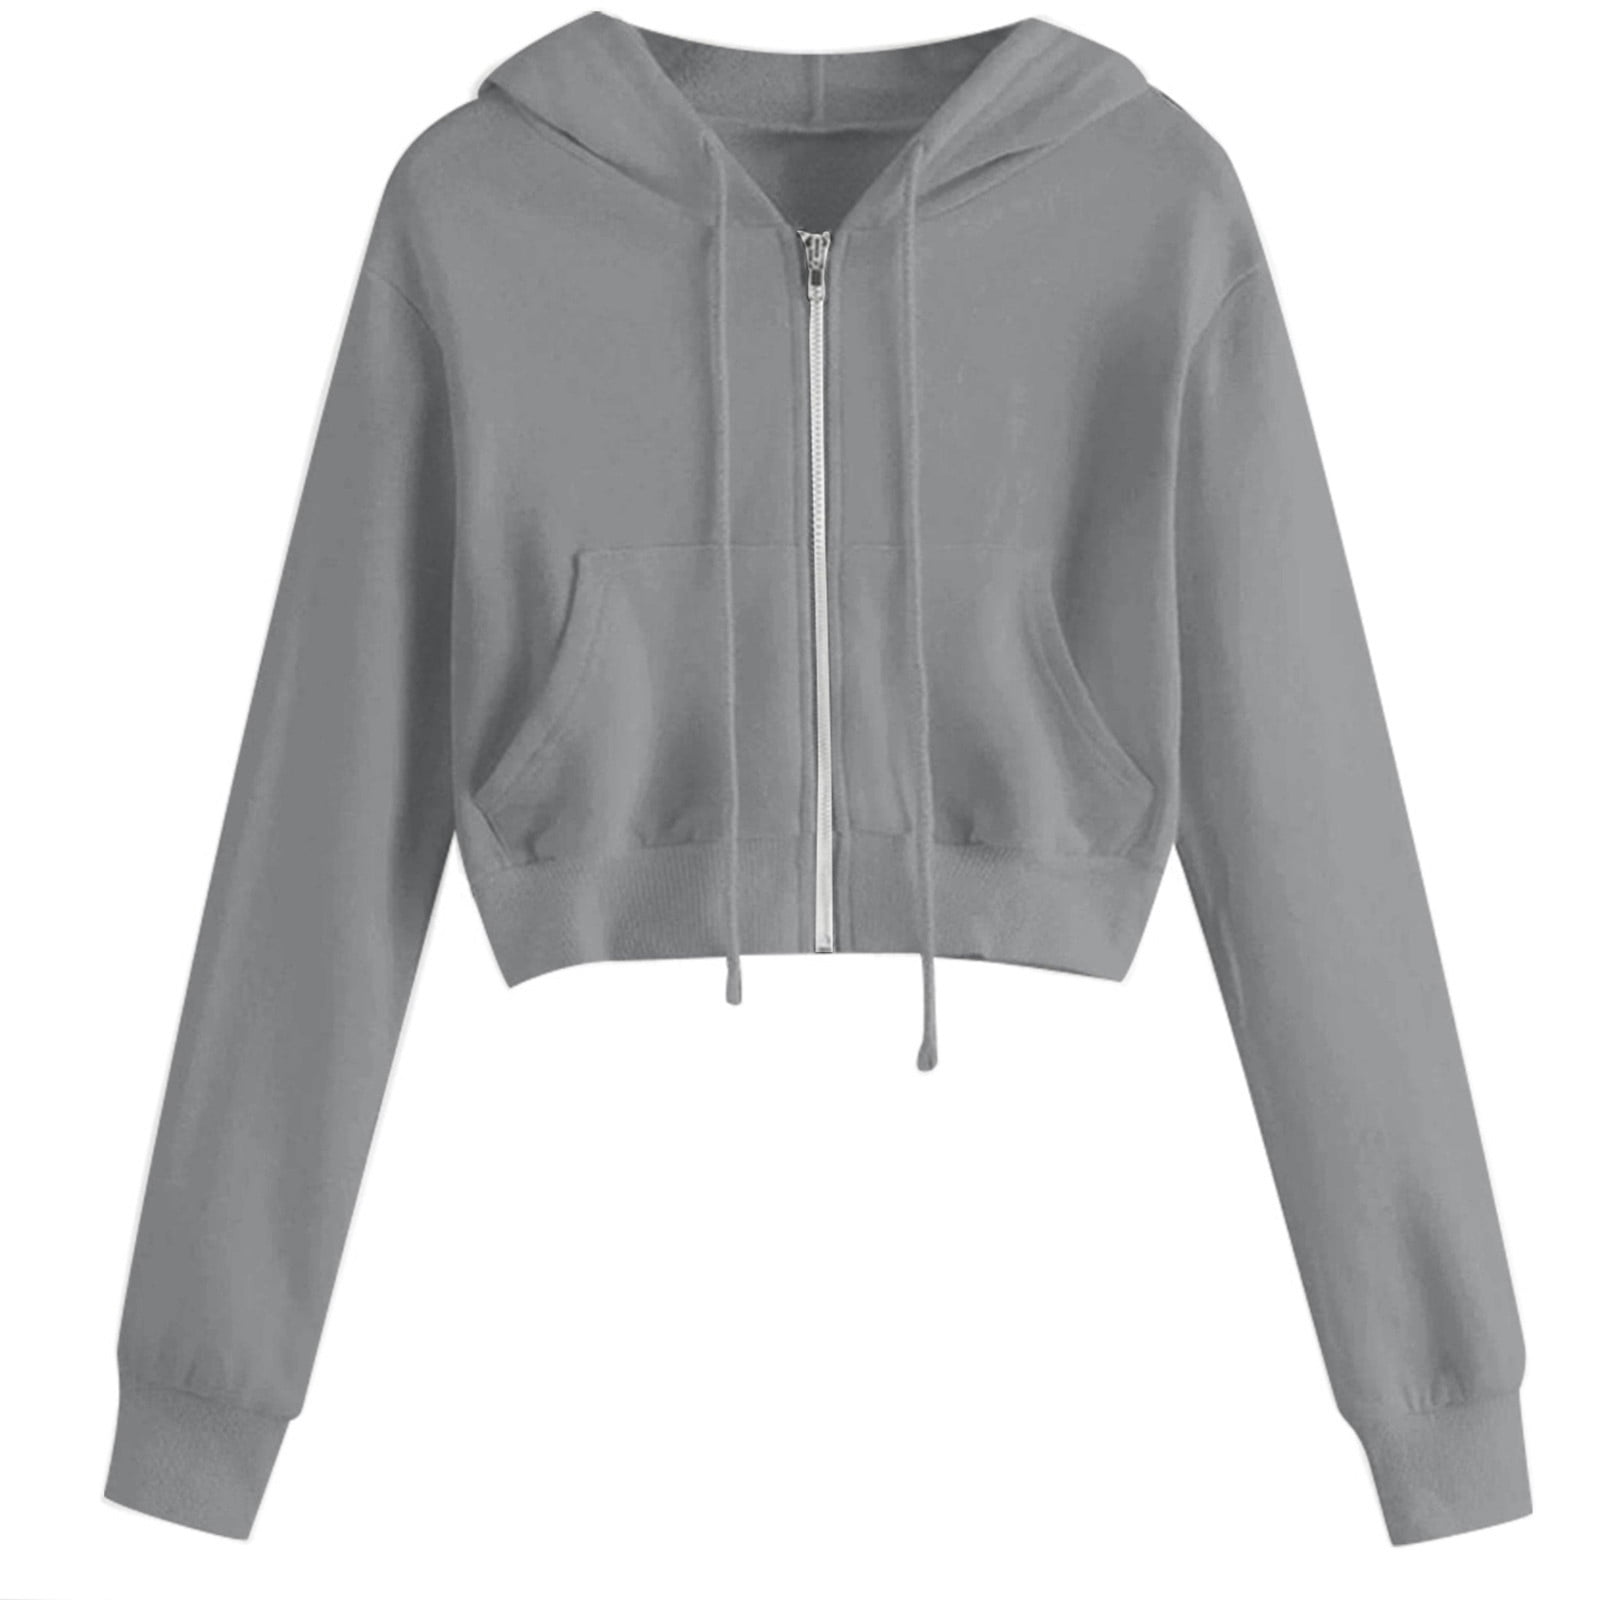 Cotton Crop Sweatshirt Long Sleeve Jackets Fashion Pockets Plain Zip Up  Cropped Hoodie Womens Sports Outwear (Small, Gray) 